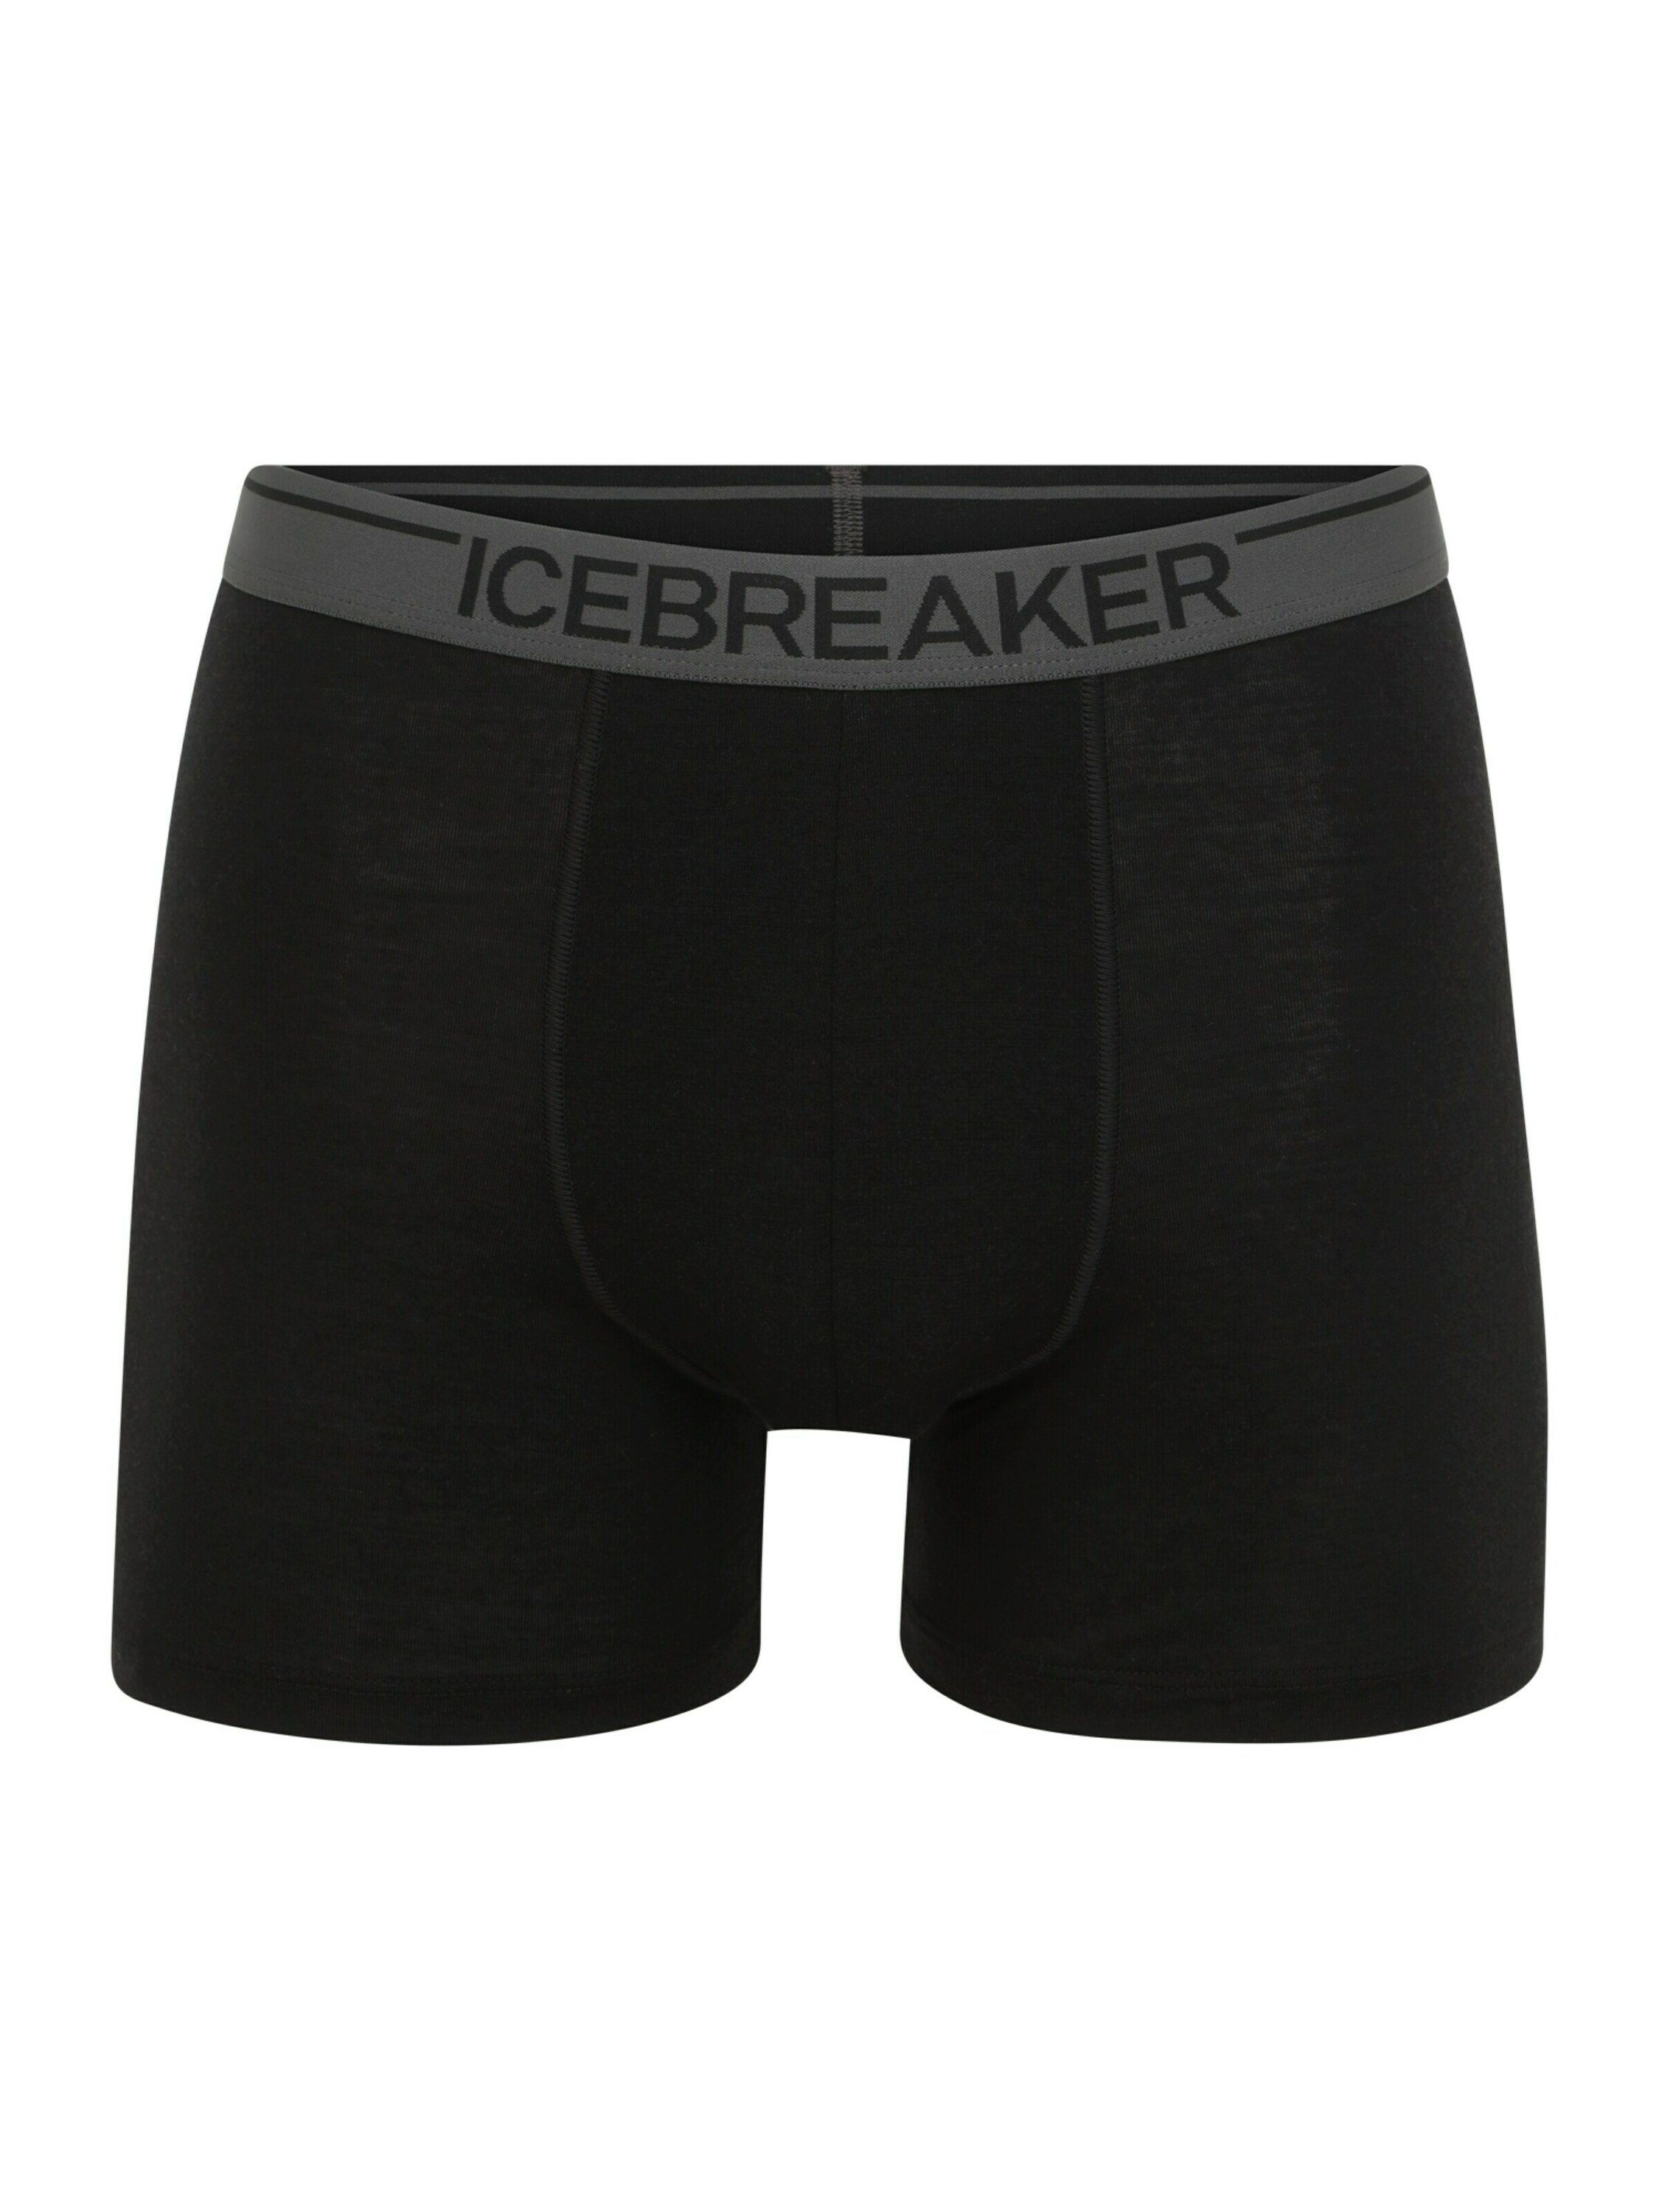 (1-St) Icebreaker Anatomica BLACK-010 Boxershorts